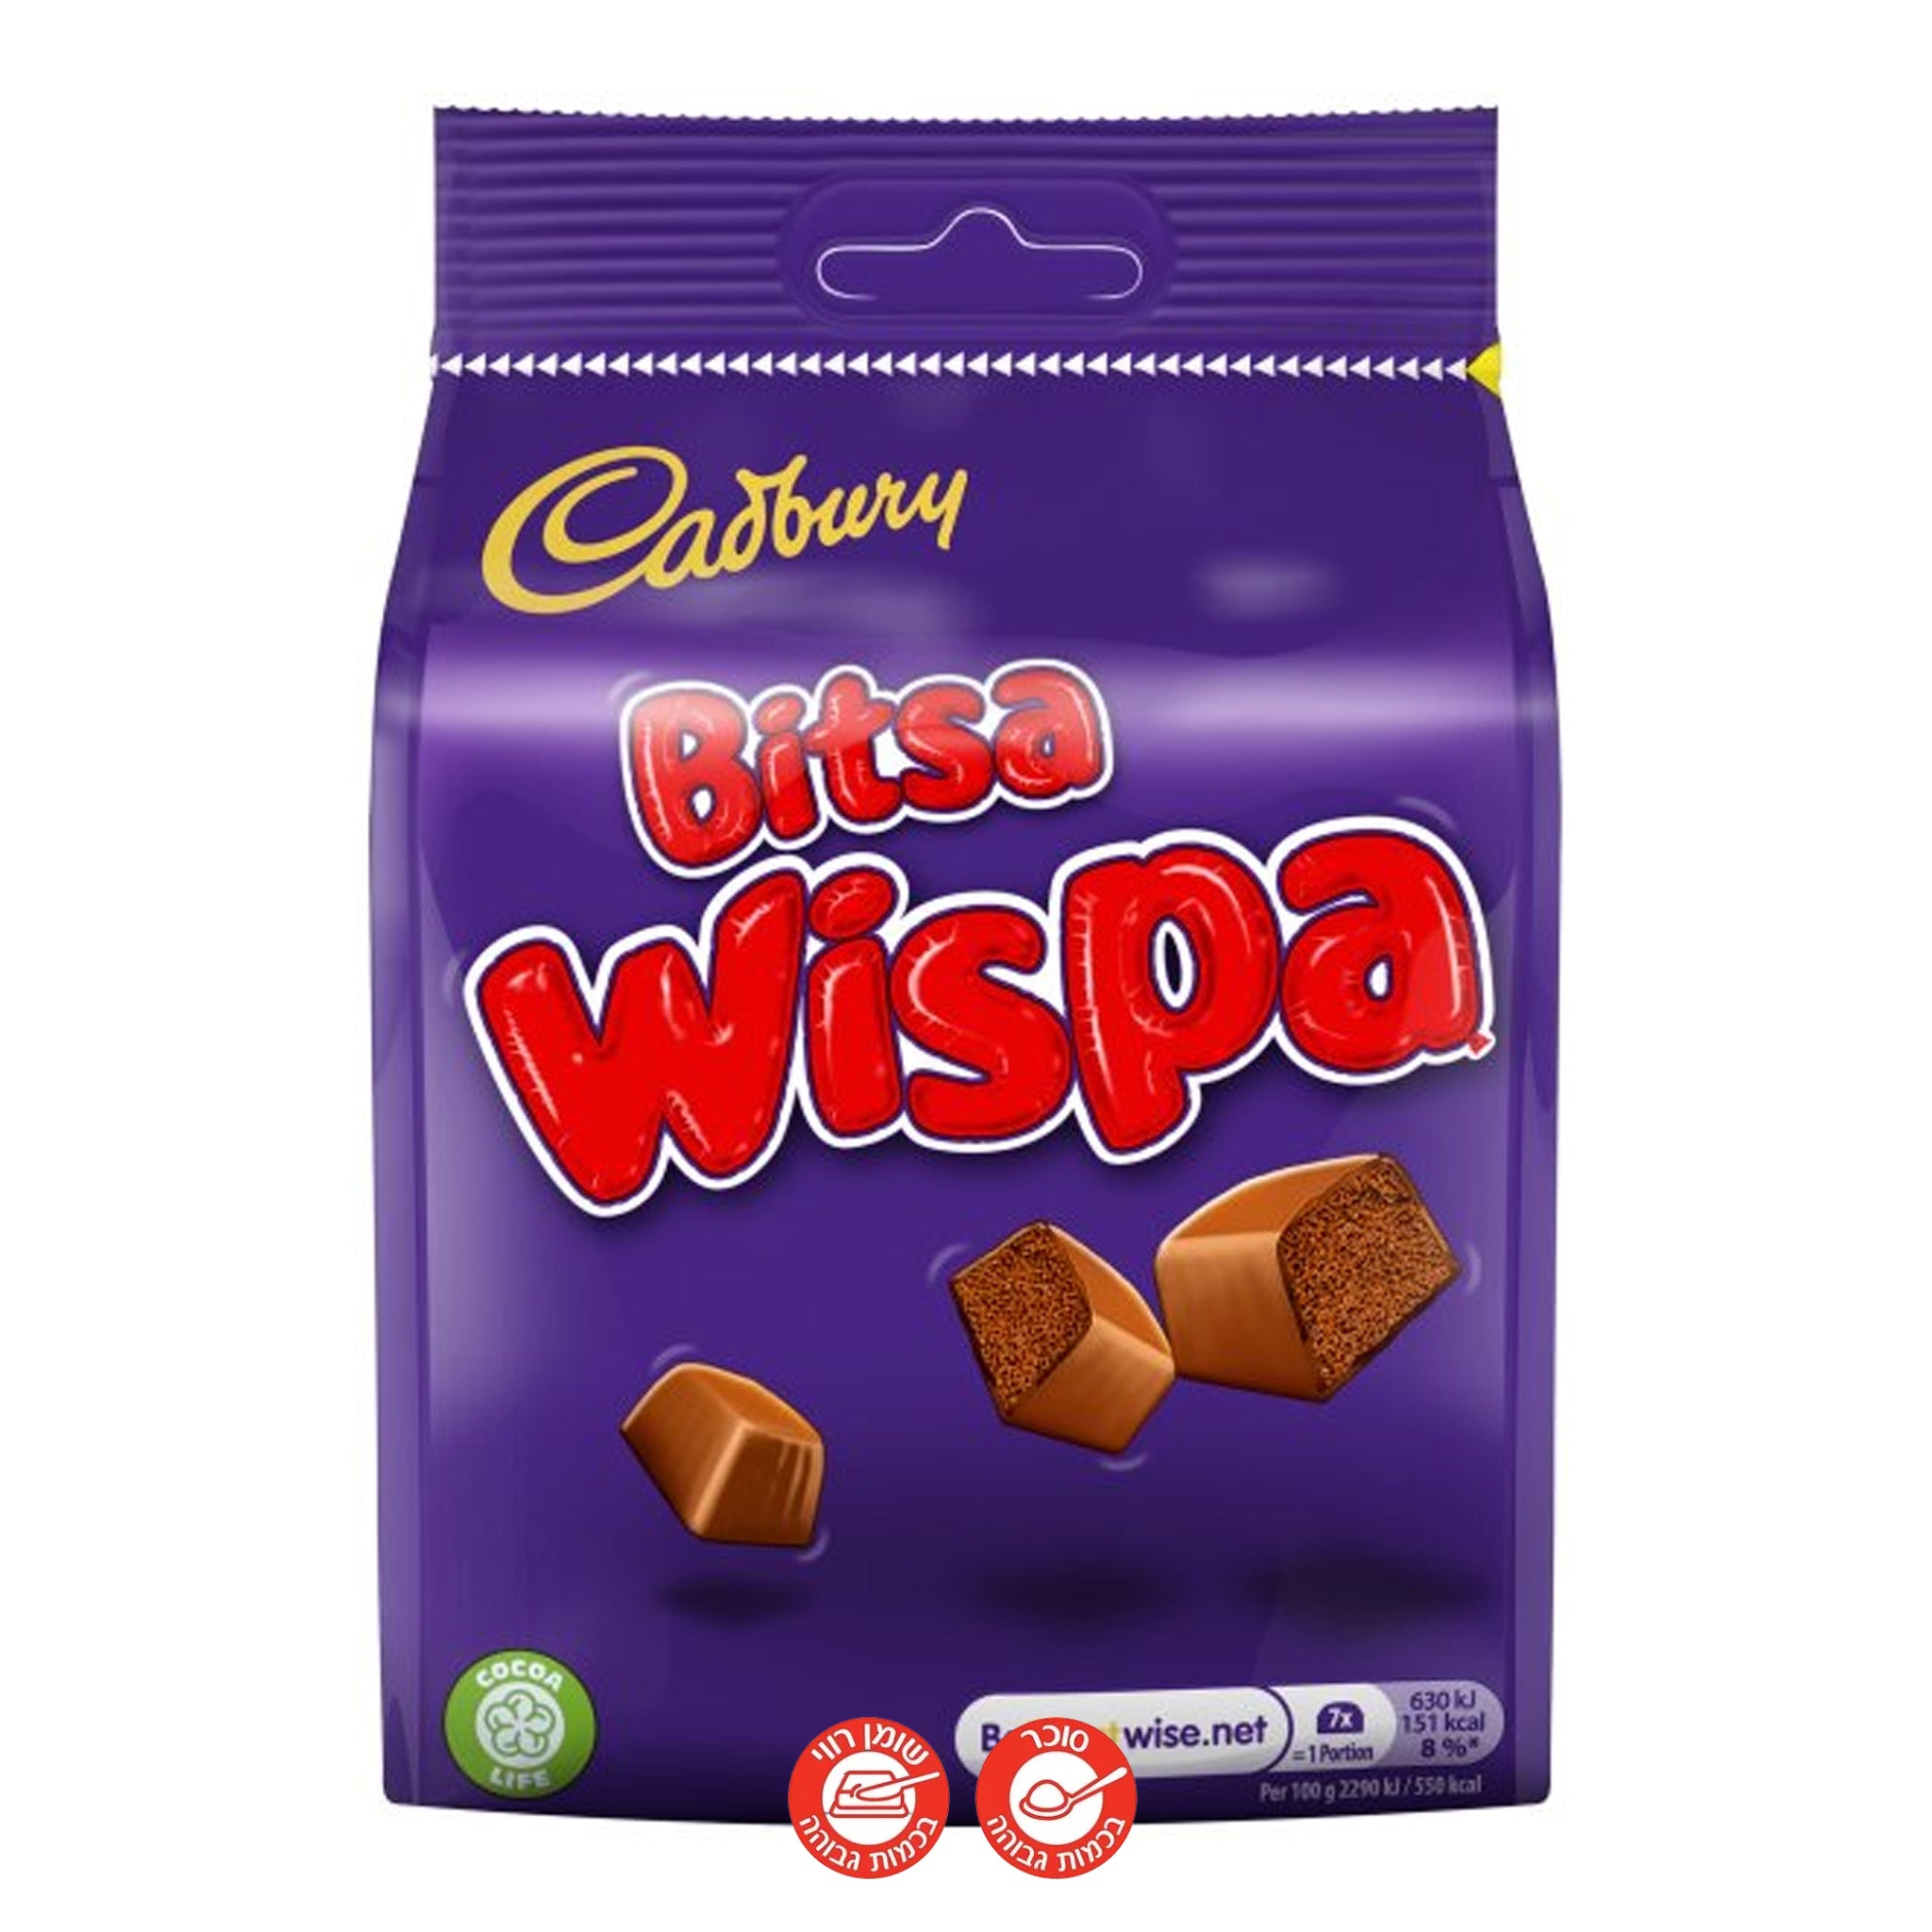 Cadbury Wispa Bites קדבורי ויספה נגיסים שוקולד